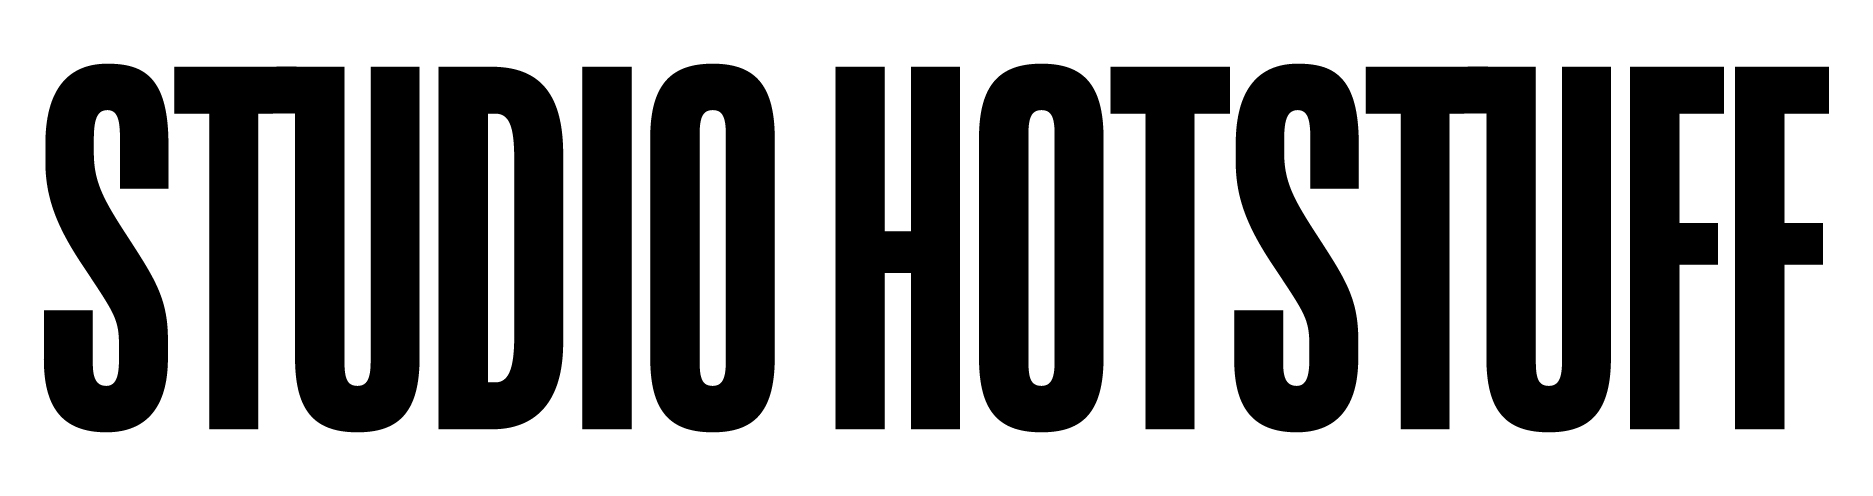 Hotstuff | About